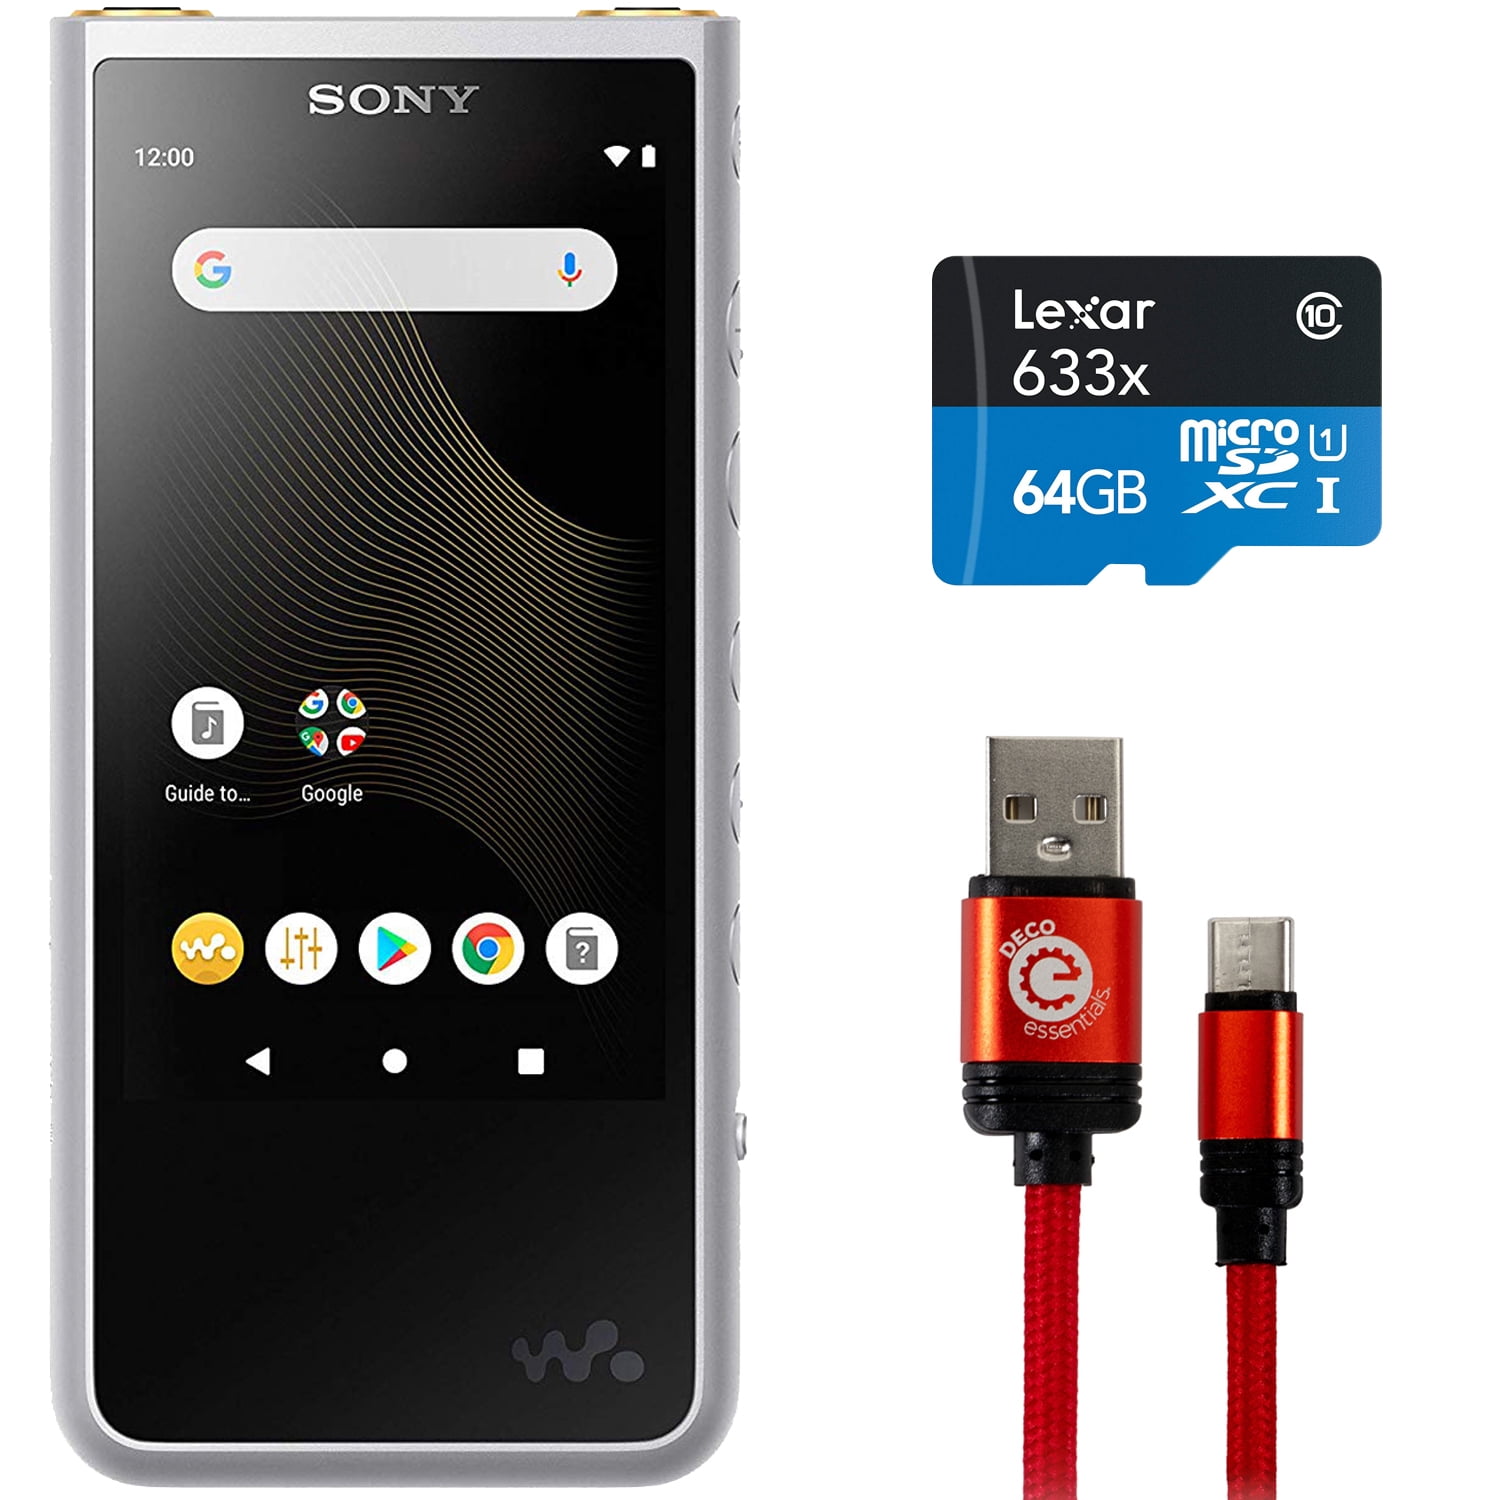 NW-A50 Walkman® Portable Audio Player, Hi-Res Audio